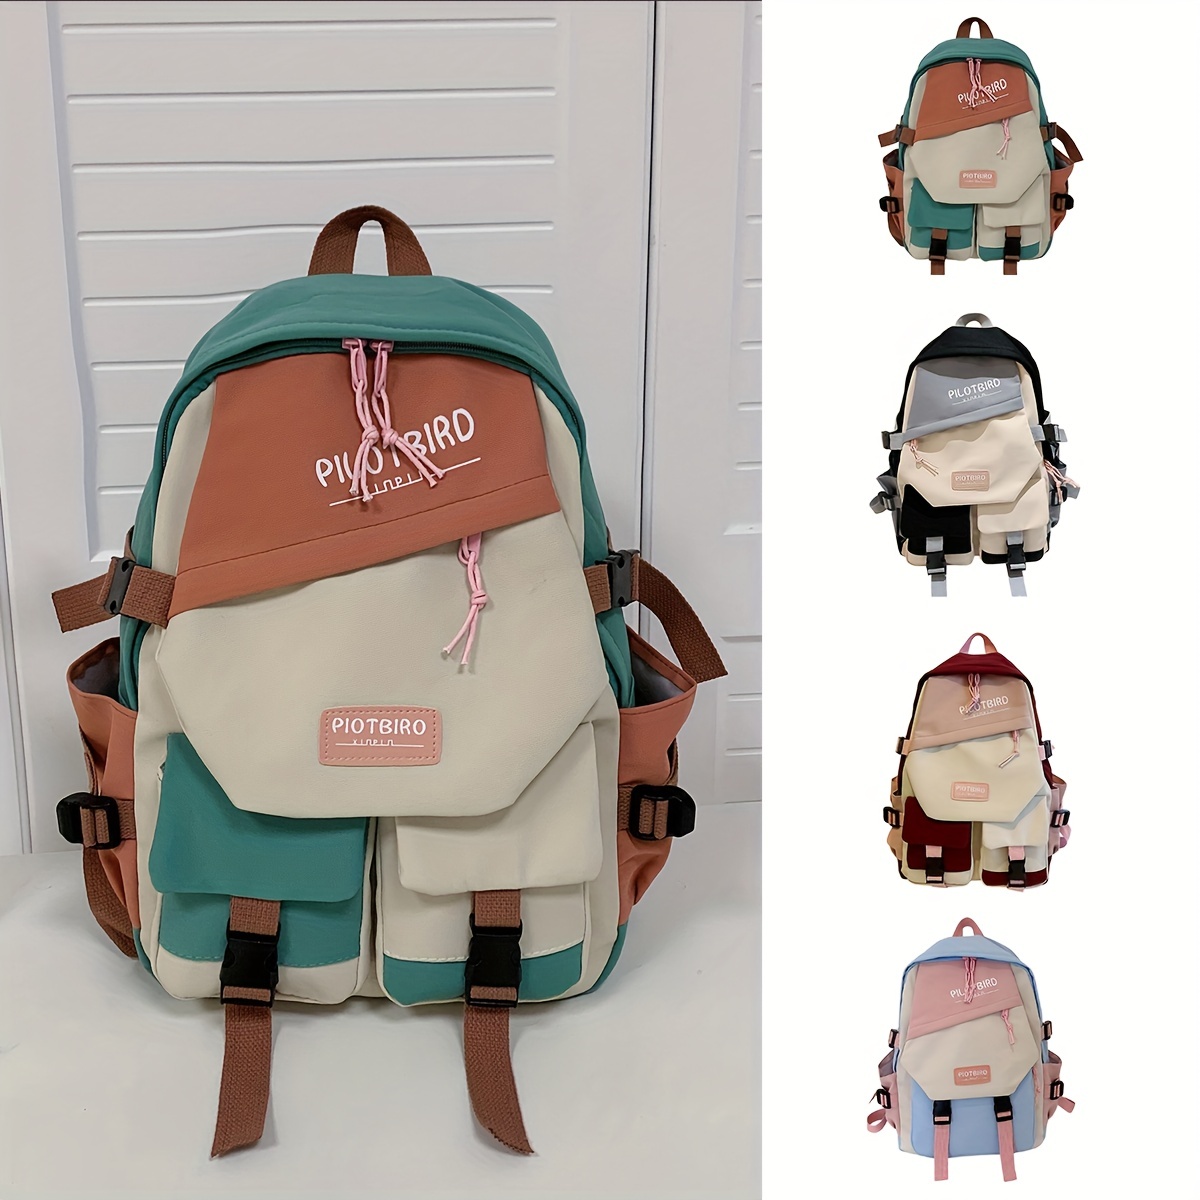  Designer Backpack Cute Lightweight Owl 3D Print Boys Backpacks  Girls School Bags Kids Bookbags